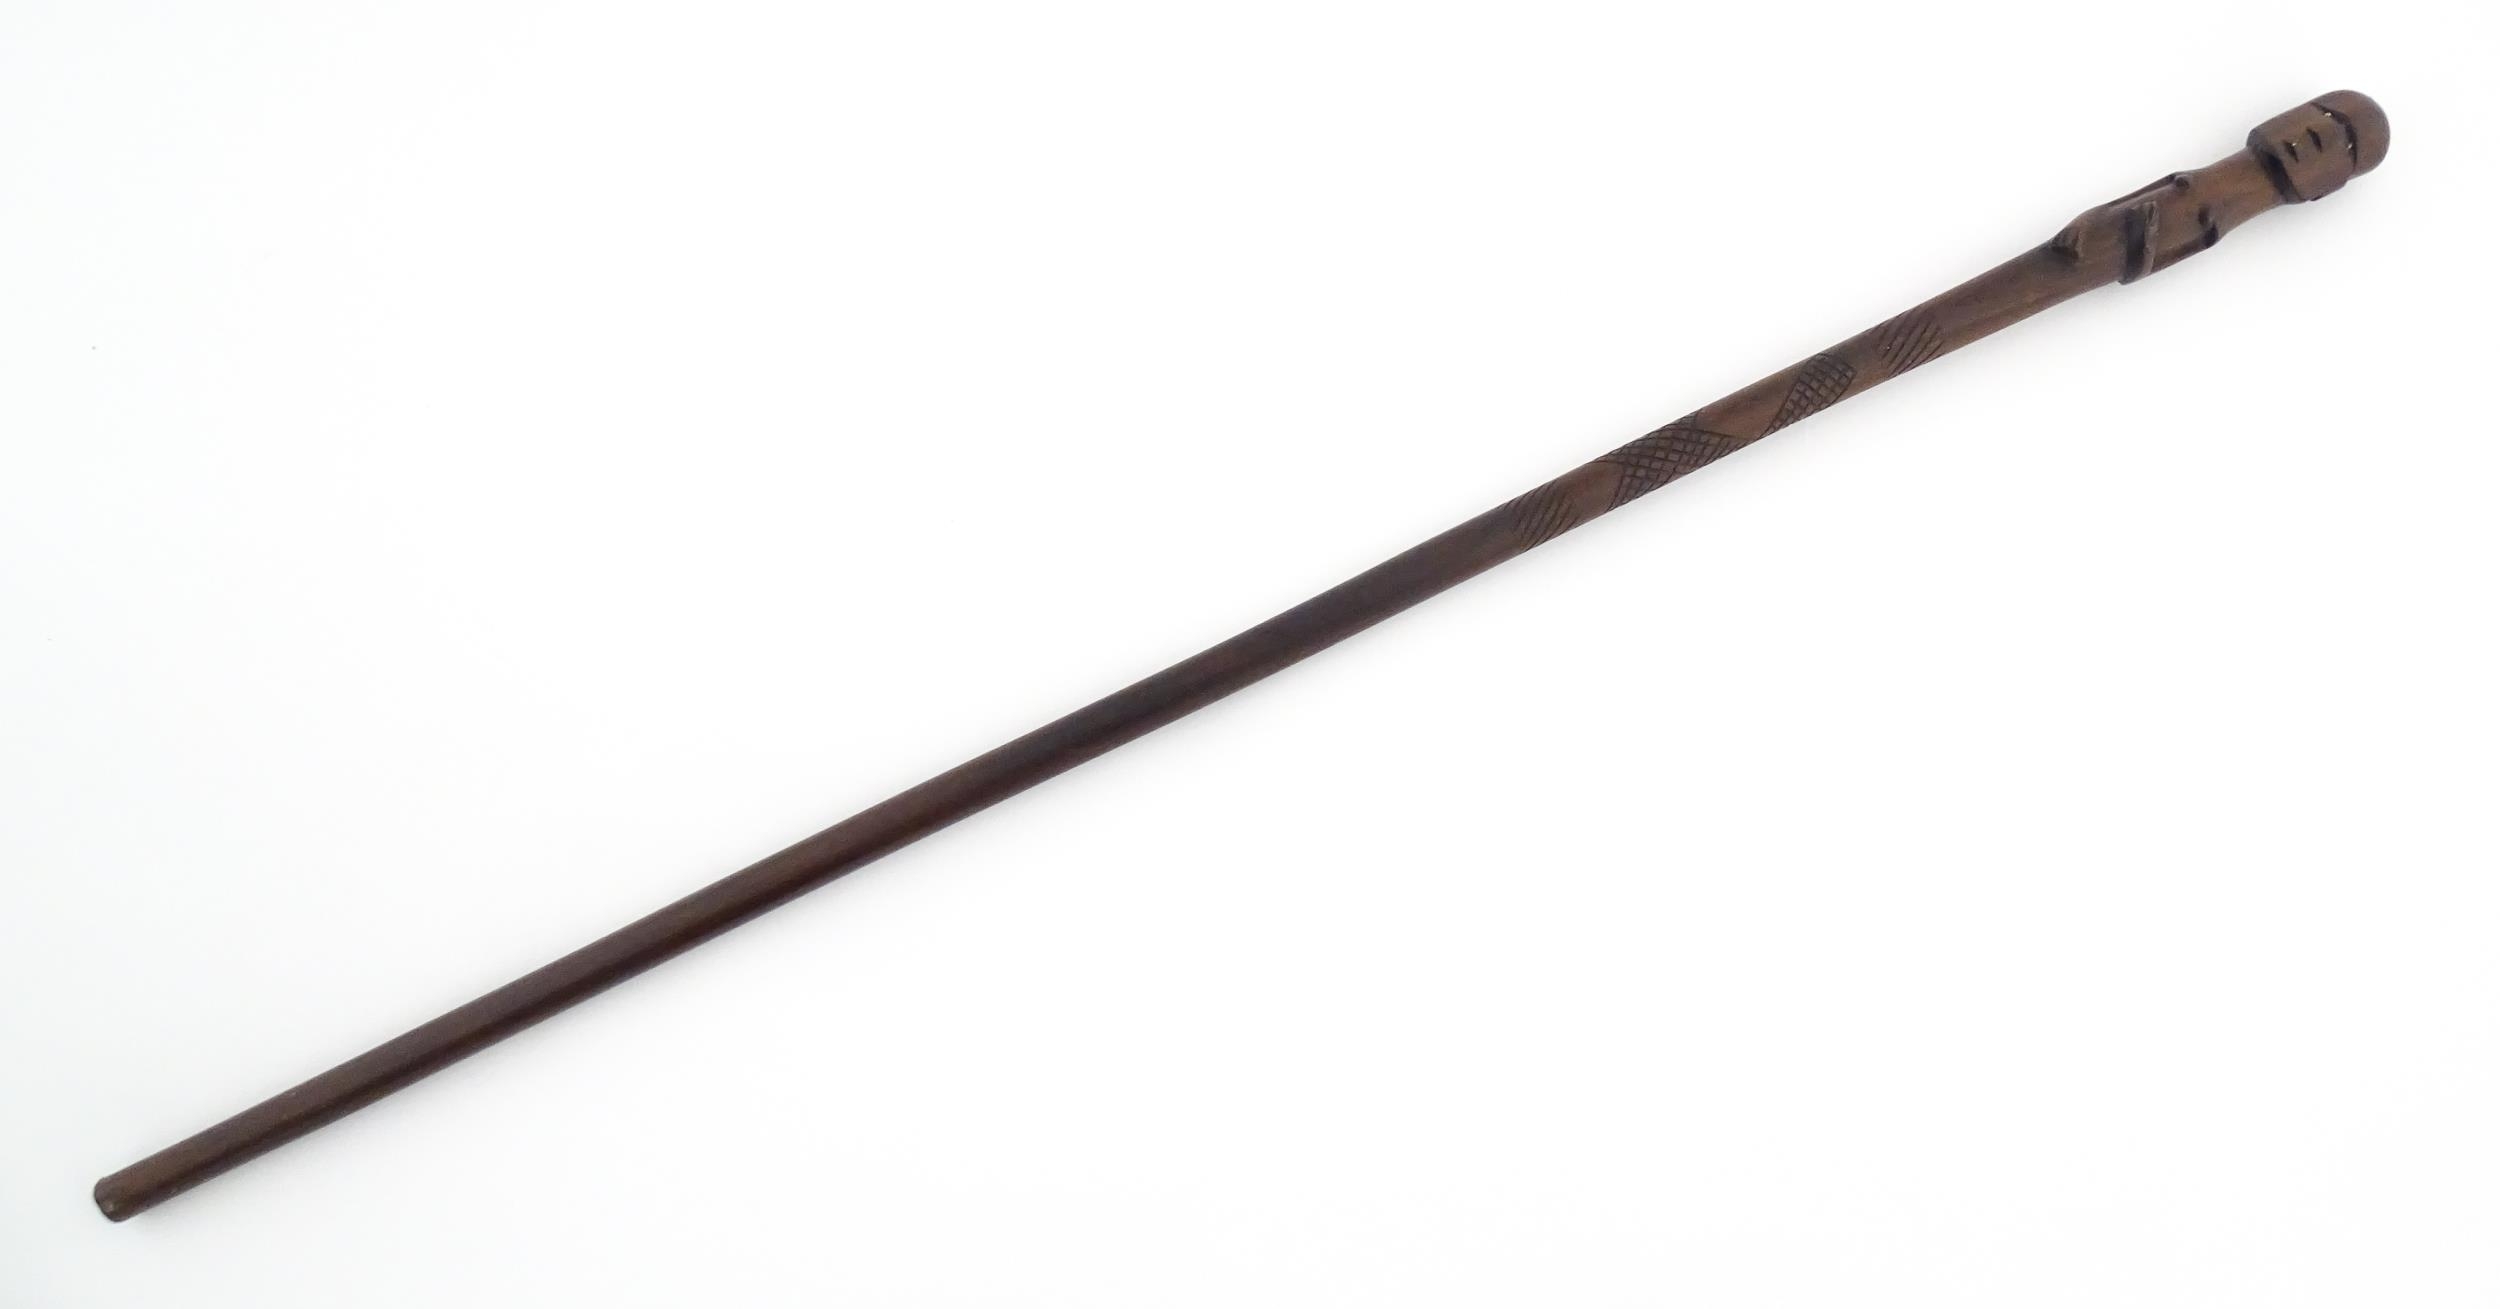 Ethnographic / Native / Tribal : An Australian Aboriginal hardwood walking stick / cane with cross